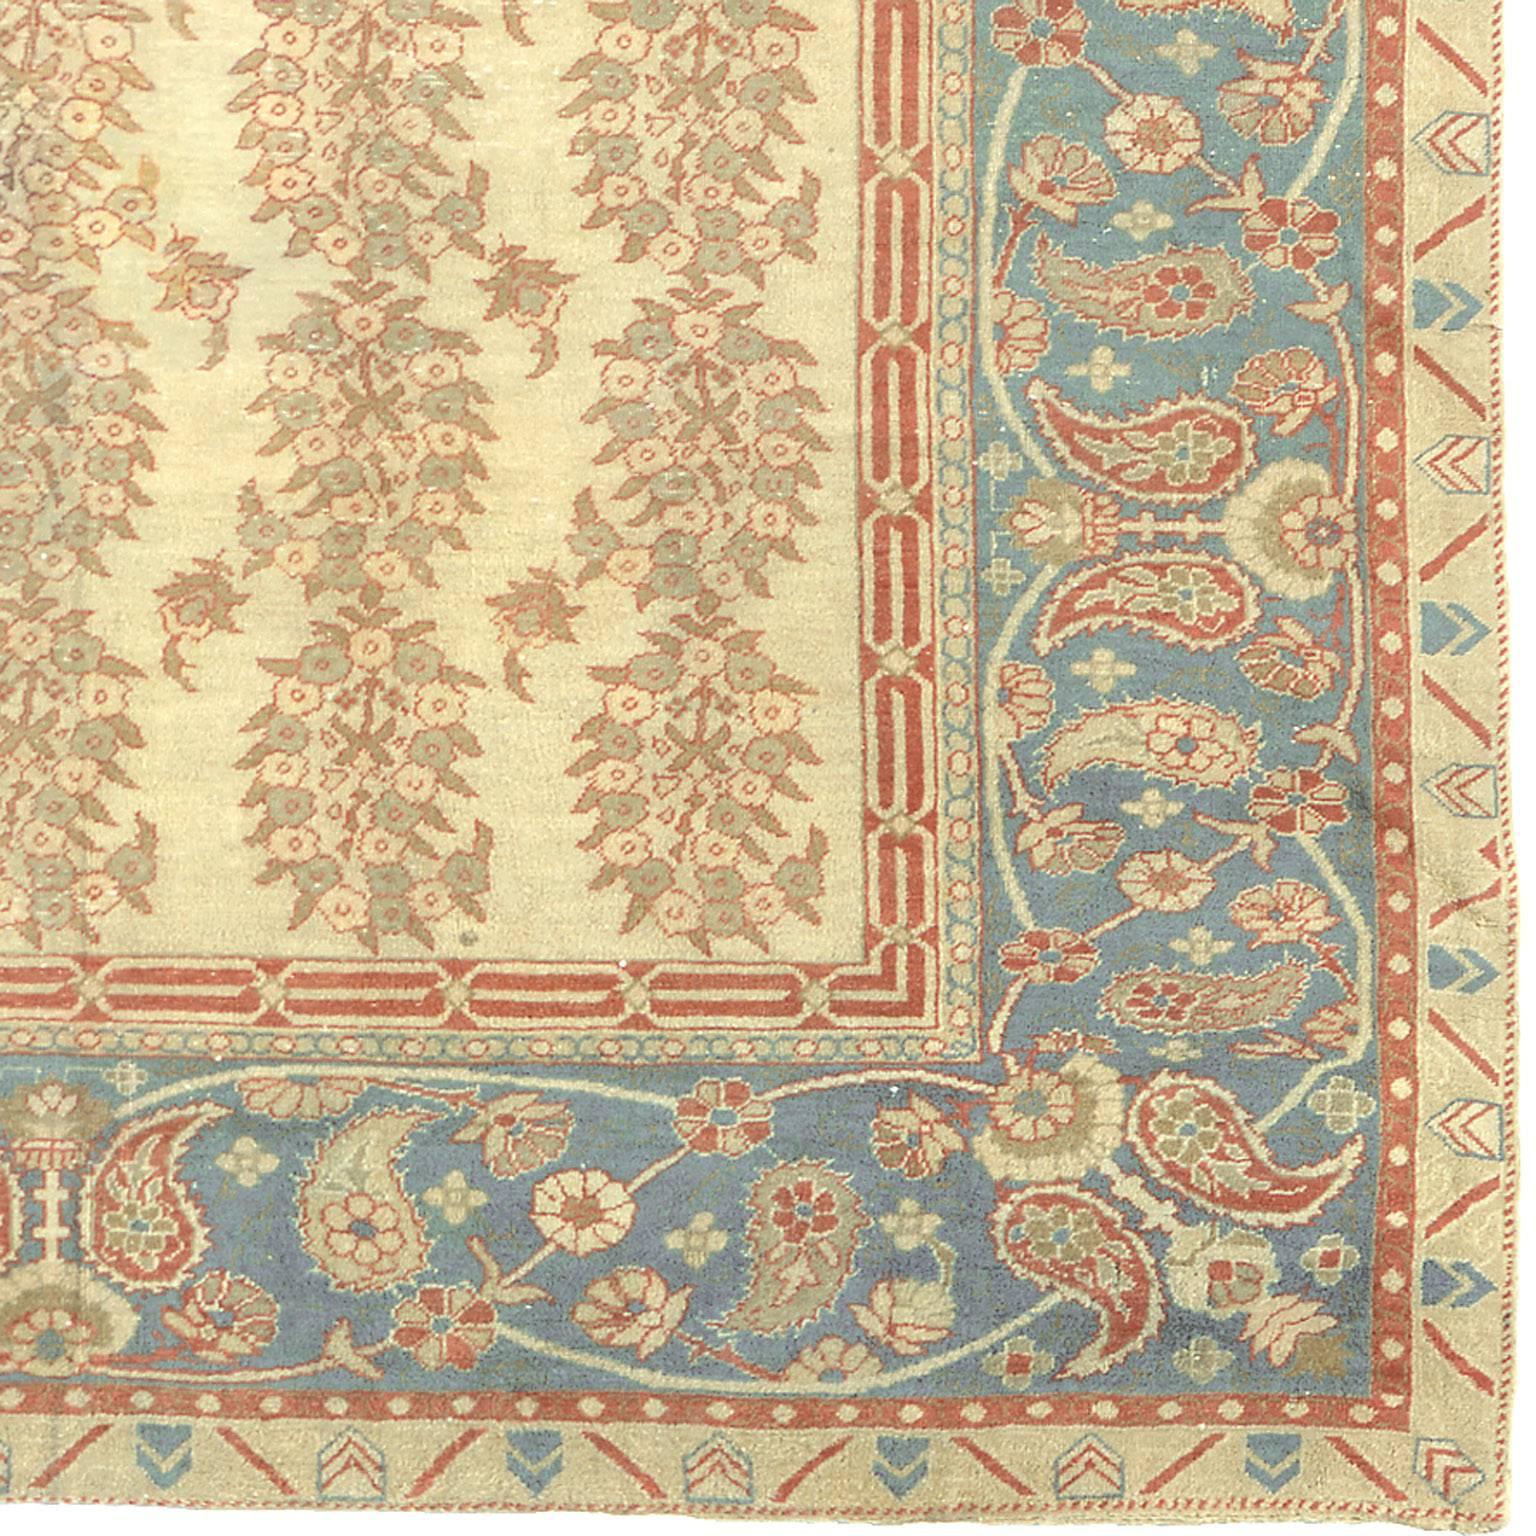 Late 19th century Indian carpet.